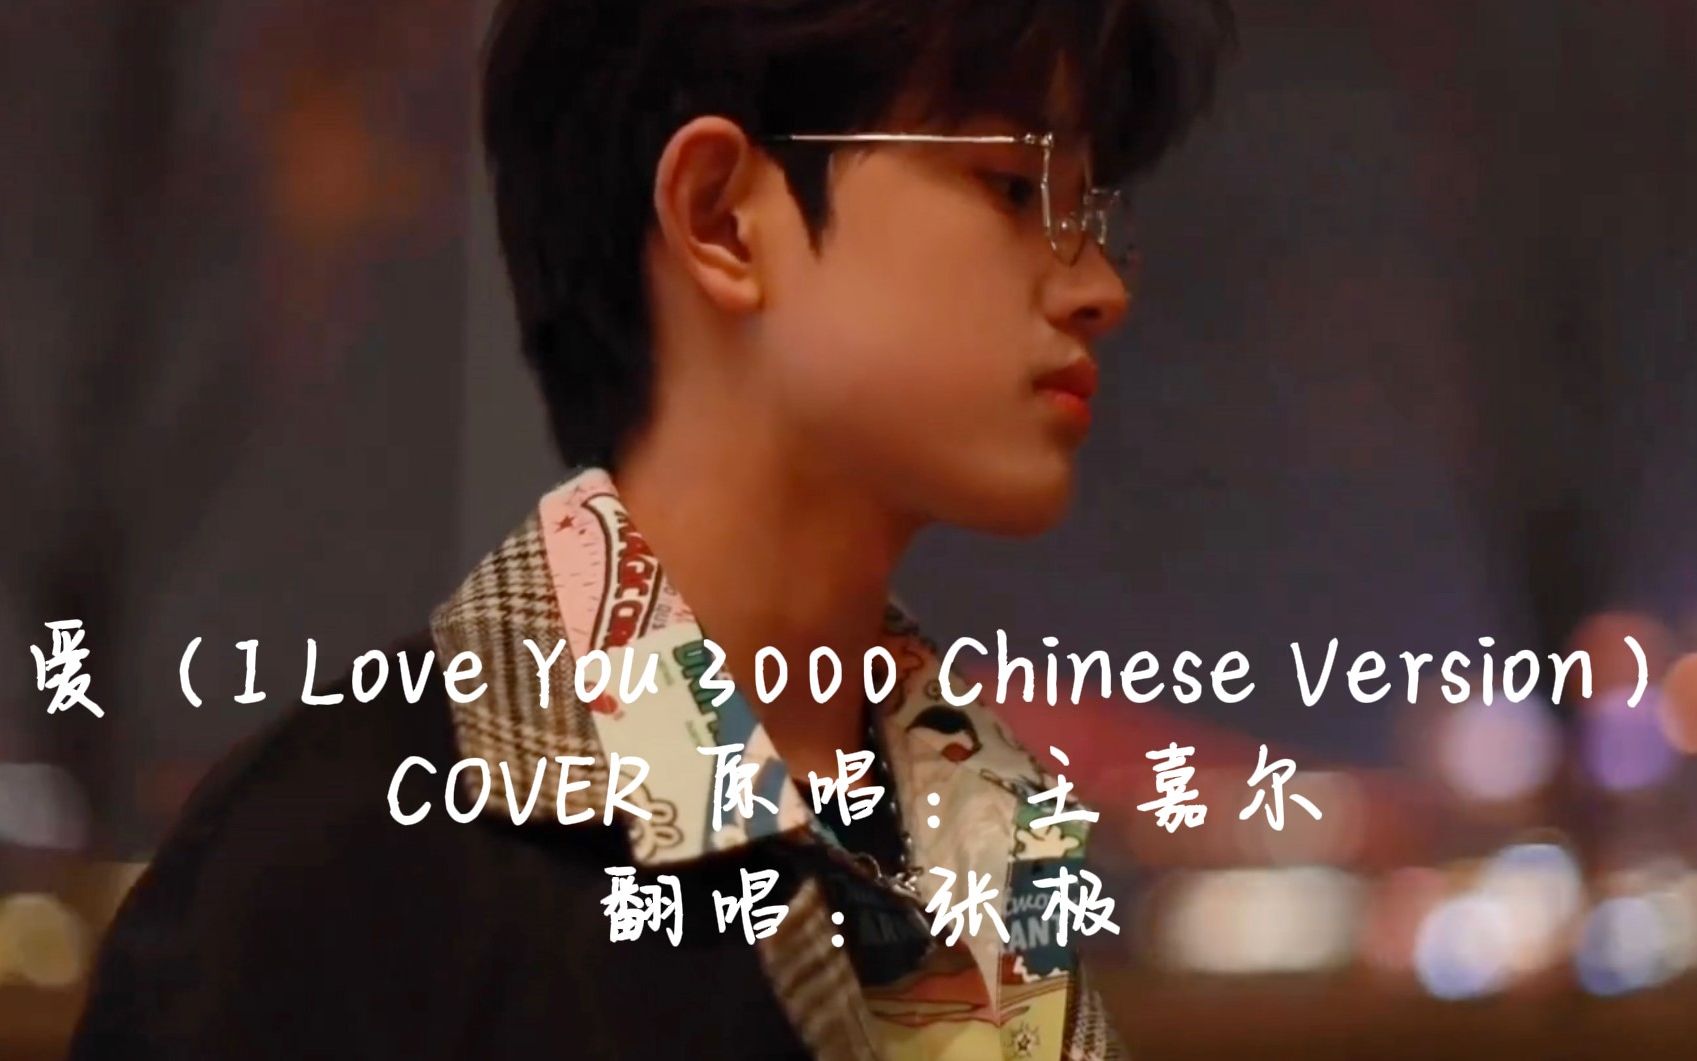 【张极】15岁生日惊喜翻唱《爱（I Love You 3000 Chinese Version）》  COVER ：王嘉尔